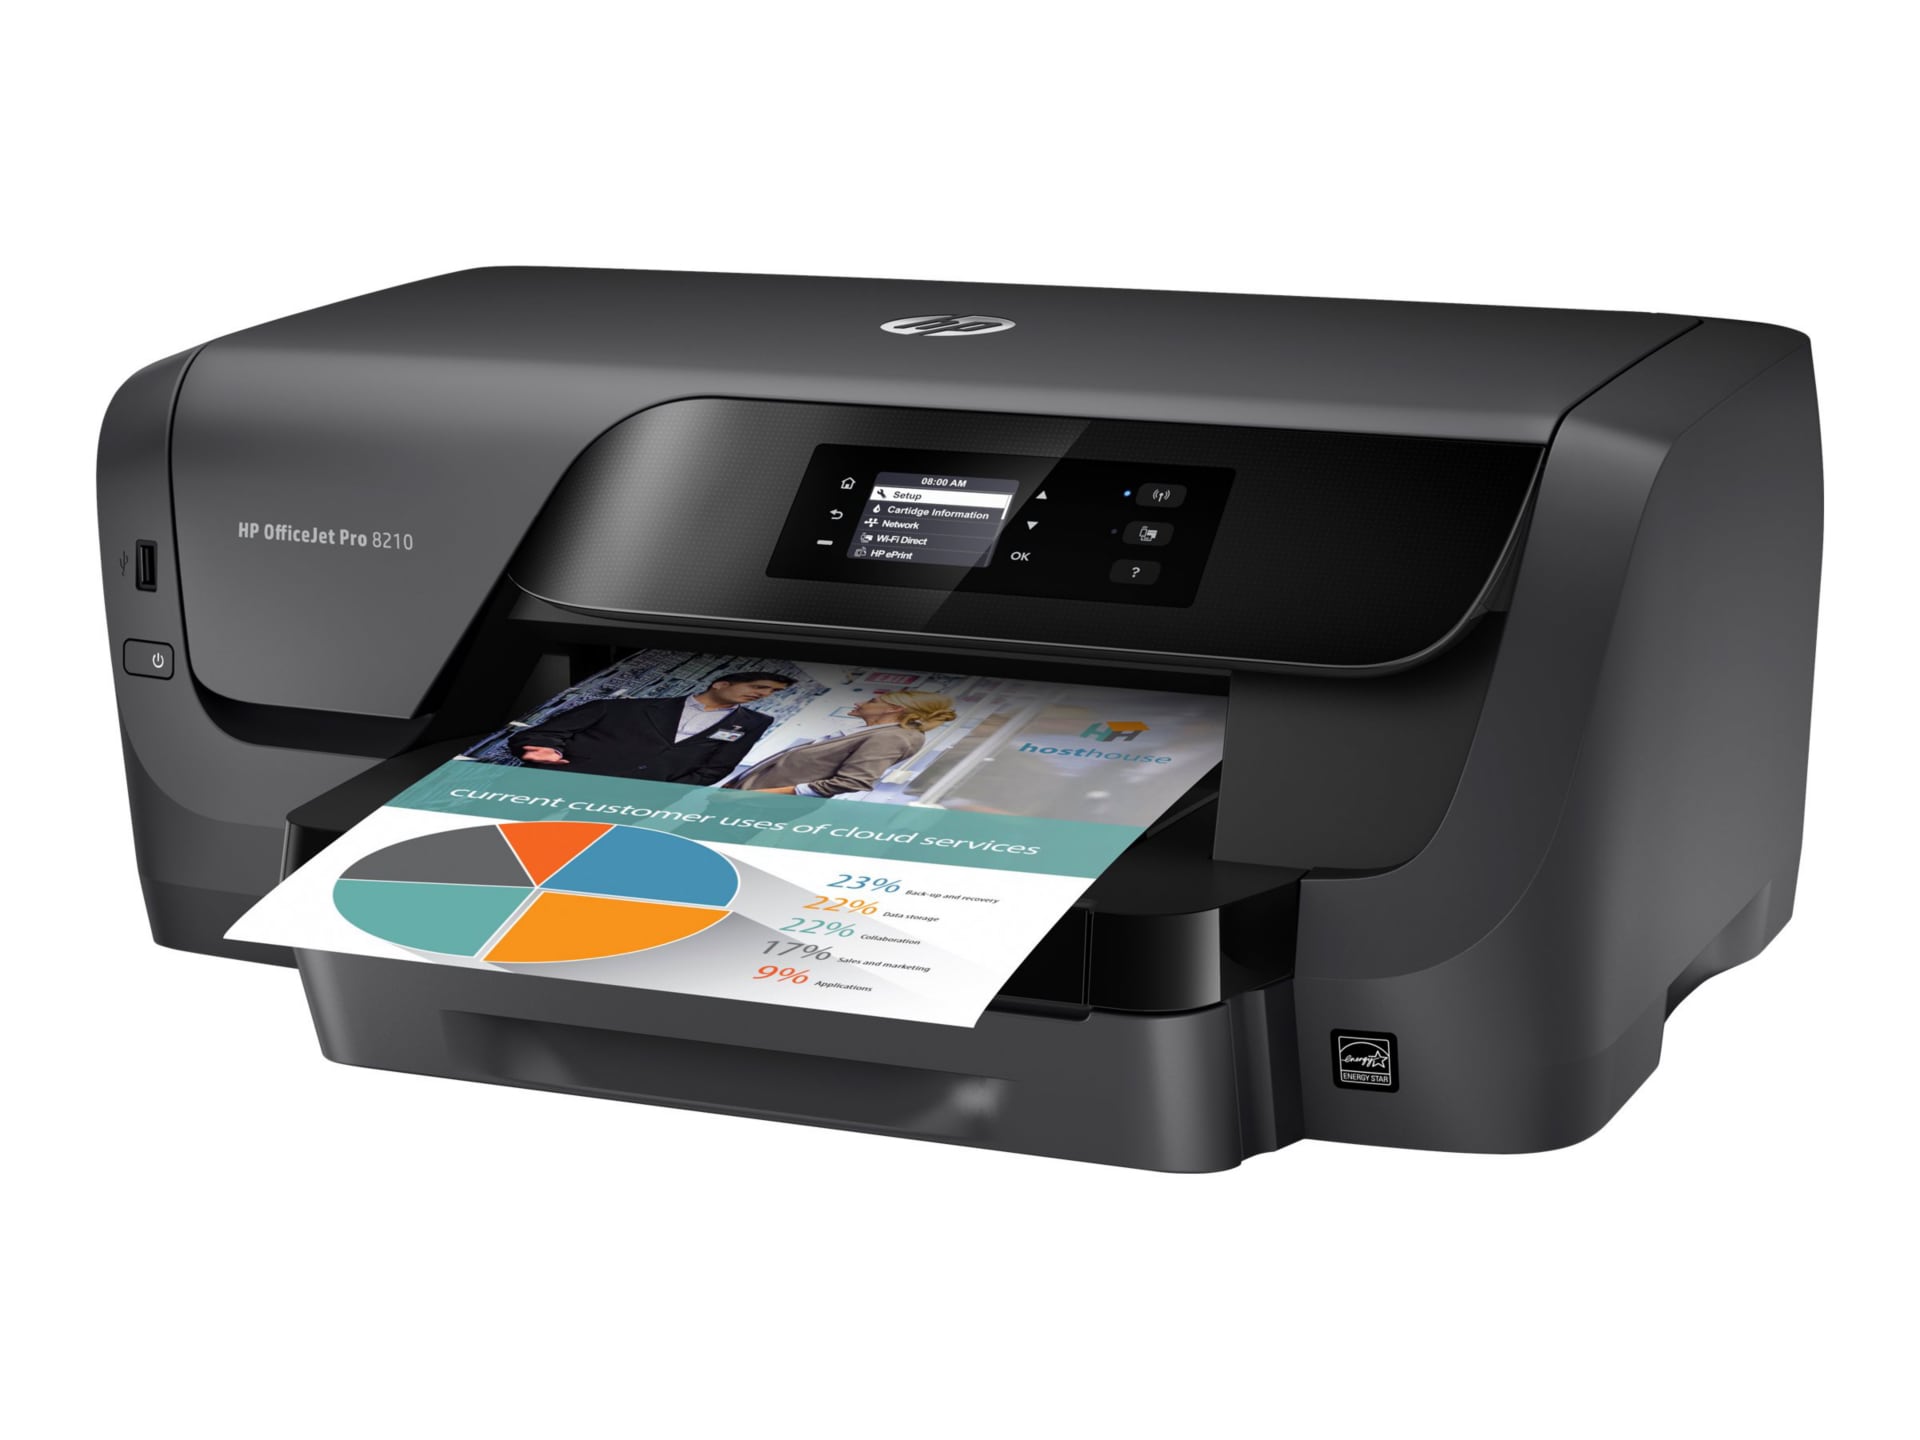 Snoep traagheid innovatie HP Officejet Pro 8210 - printer - color - ink-jet - HP Instant Ink eligible  - D9L64A#B1H - Inkjet Printers - CDW.com